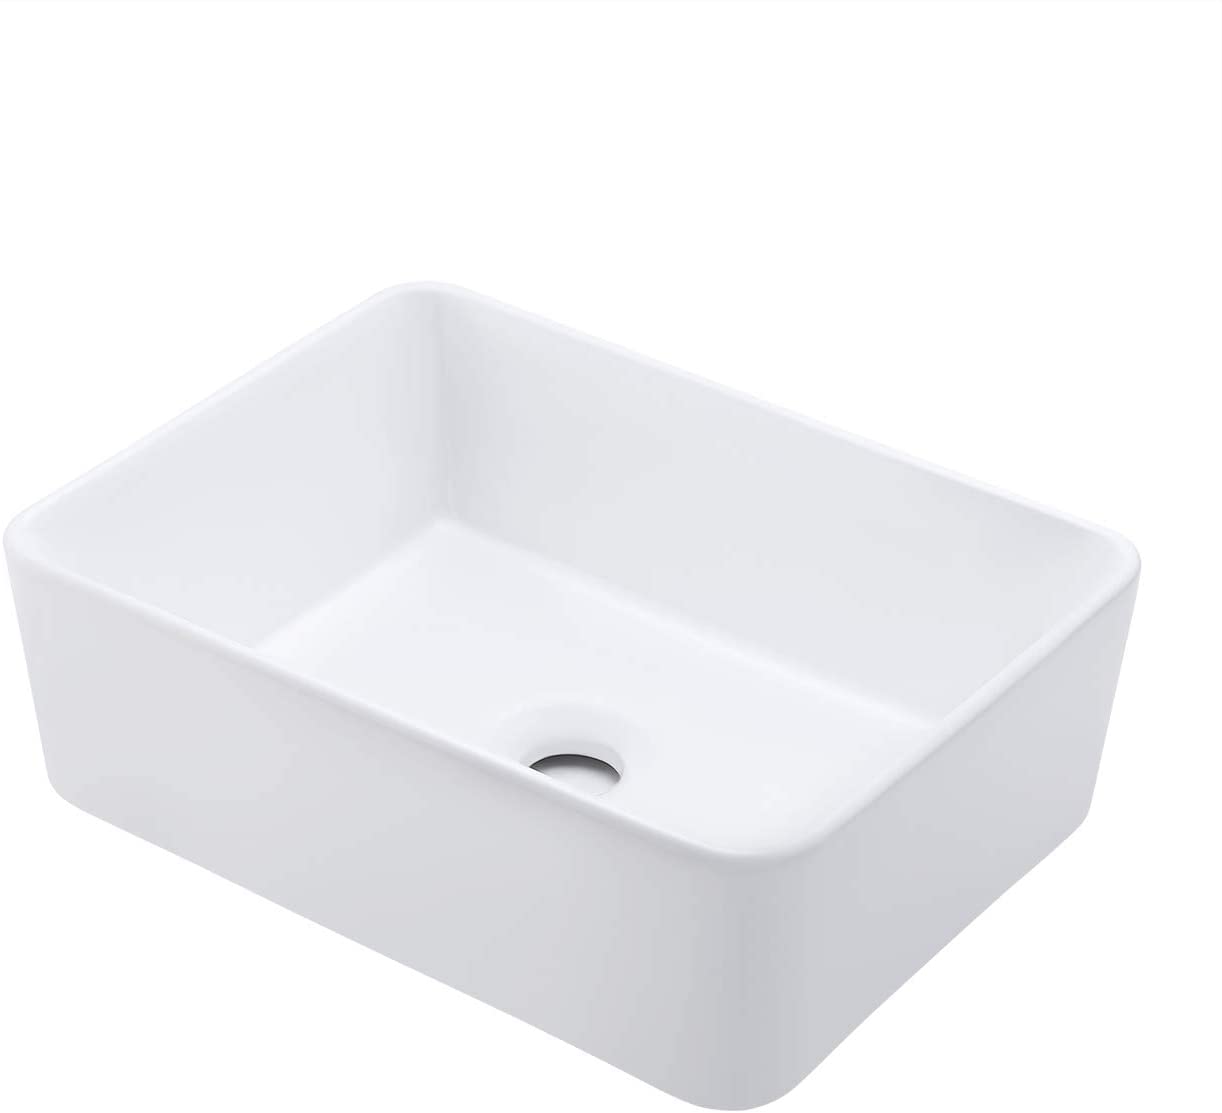 KES BVS110S40 Above-Counter Porcelain Rectangle Vessel Bathroom Sink